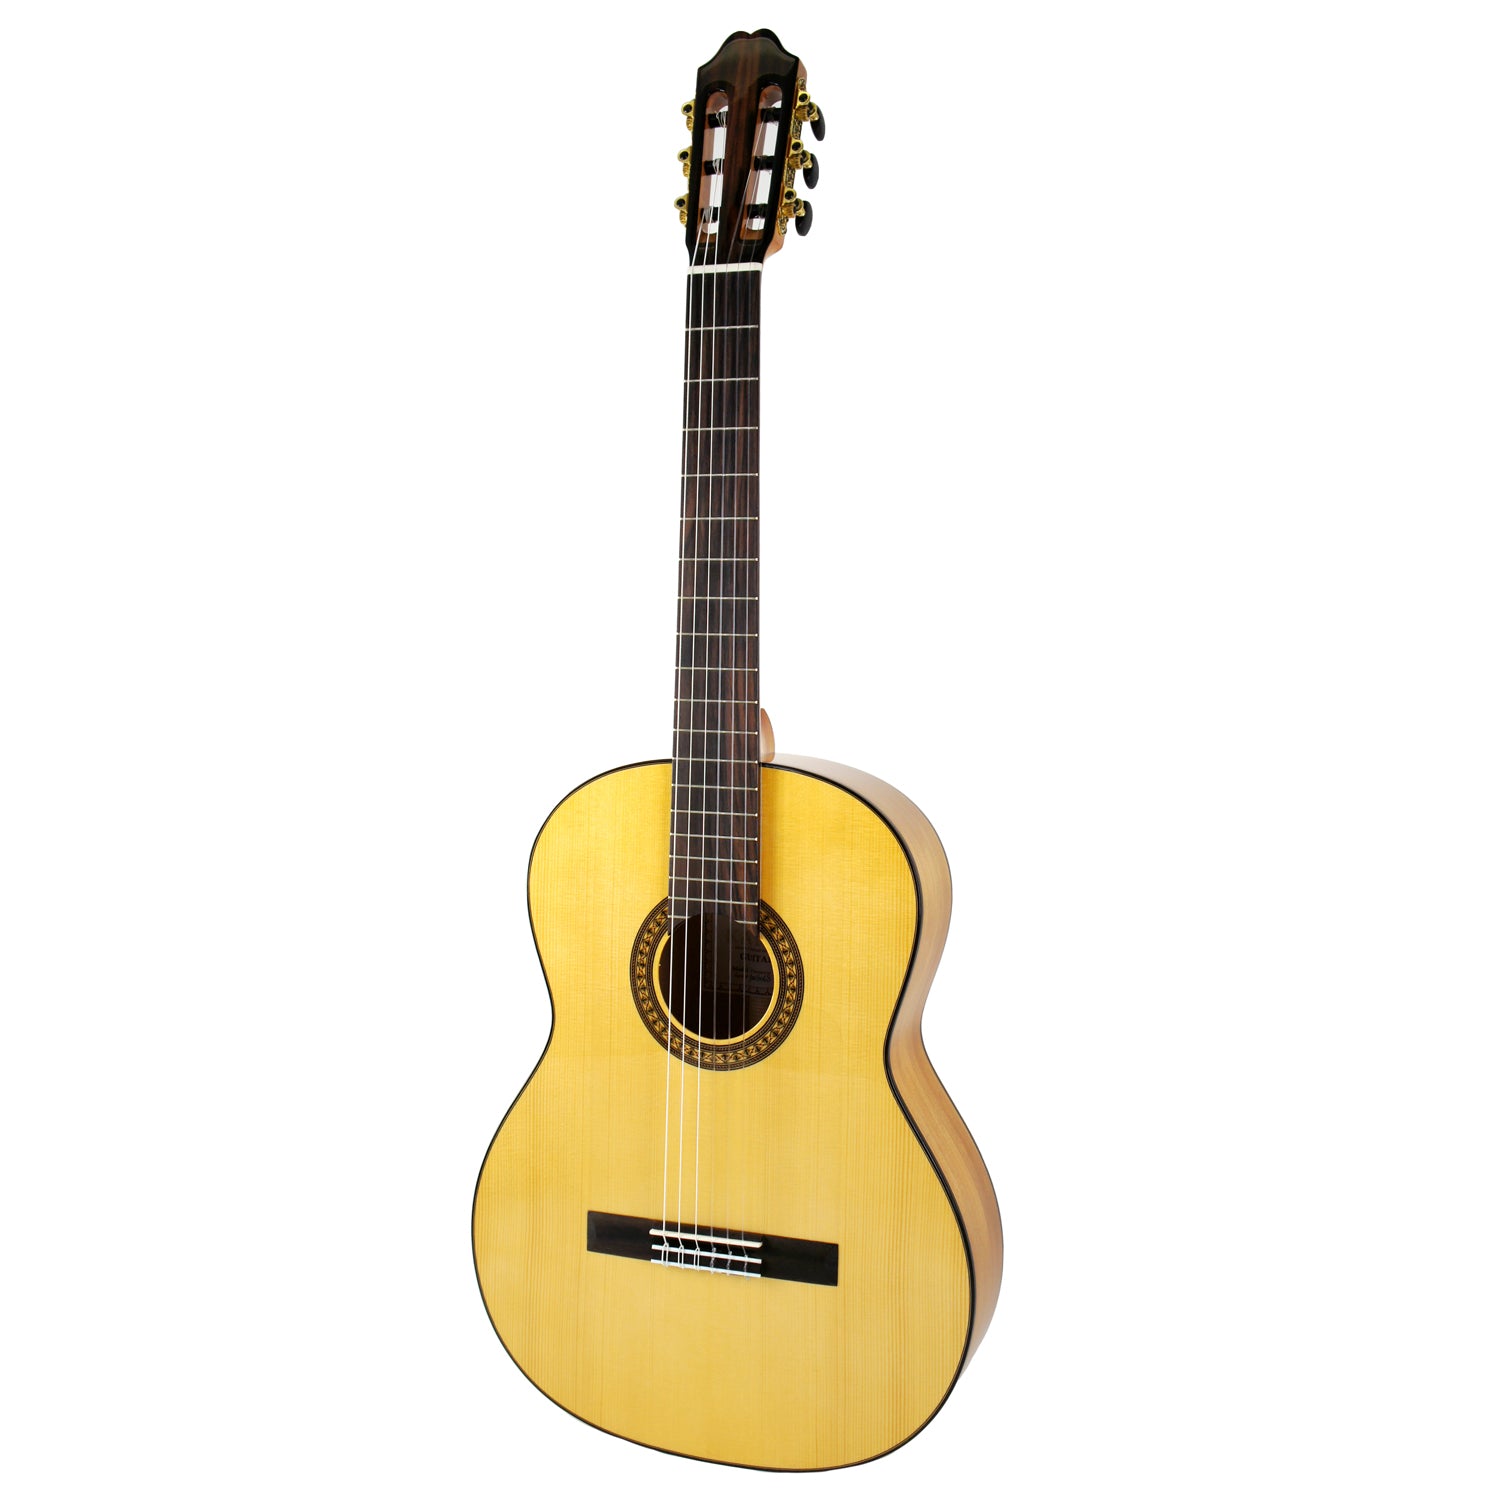 Katoh KF Solid Spruce Top Flamenco Guitar